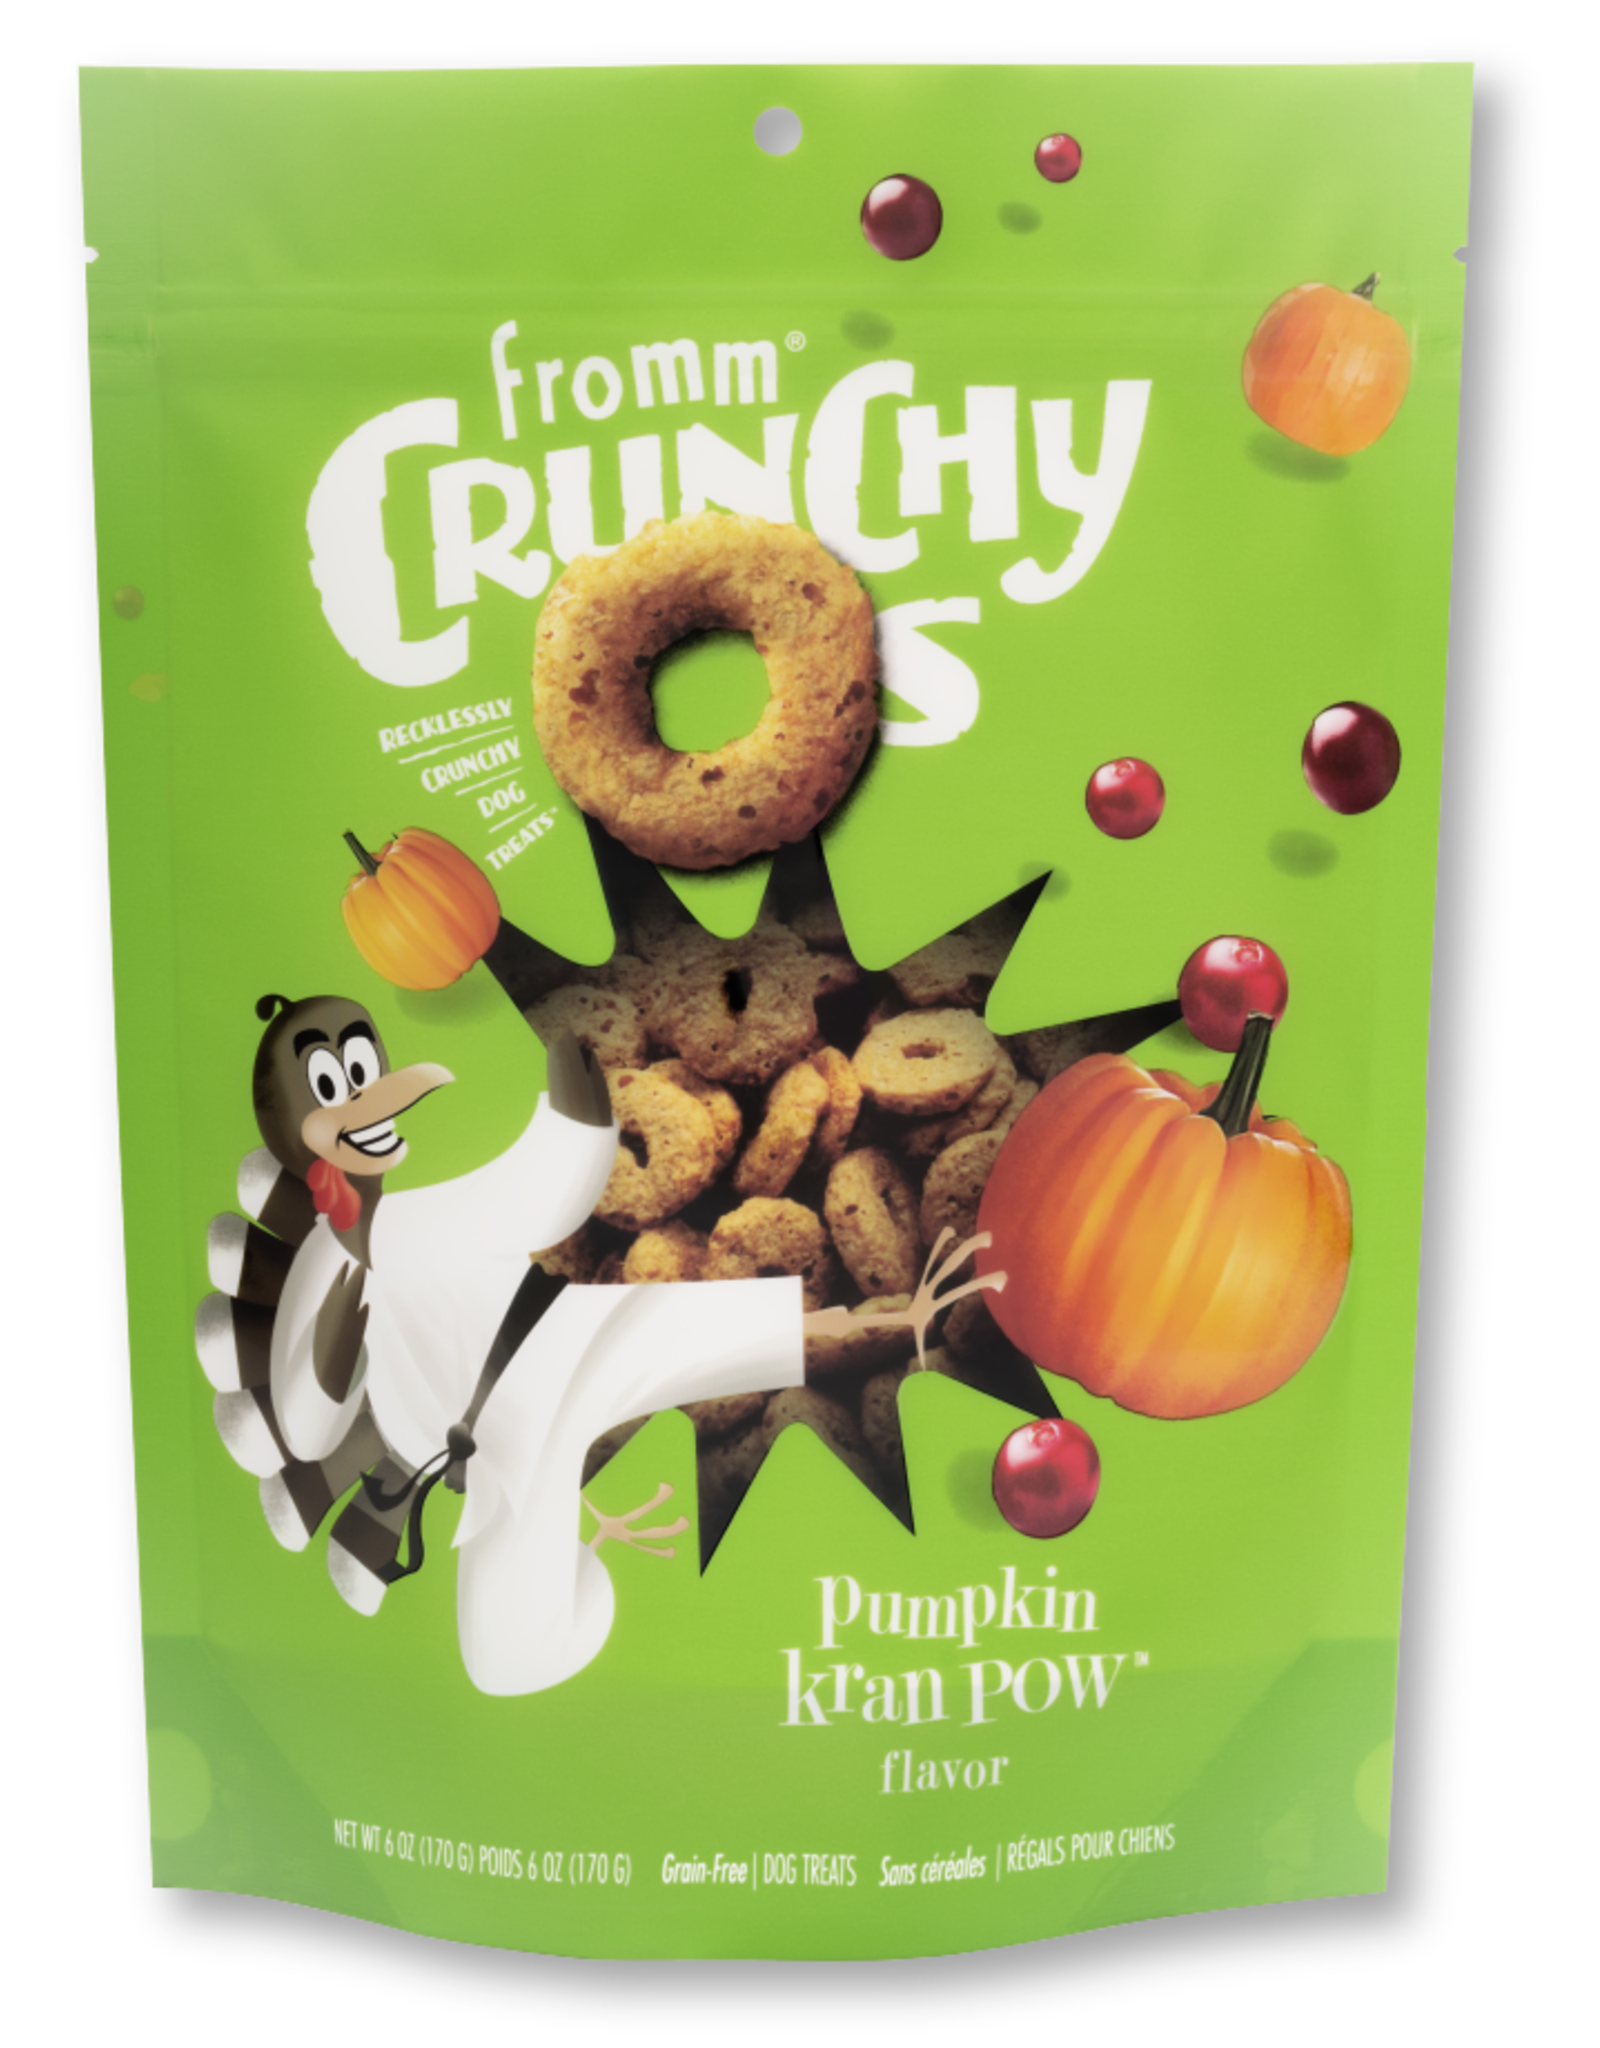 Fromm Crunchy O's Pumpkin Kran Pow 6oz